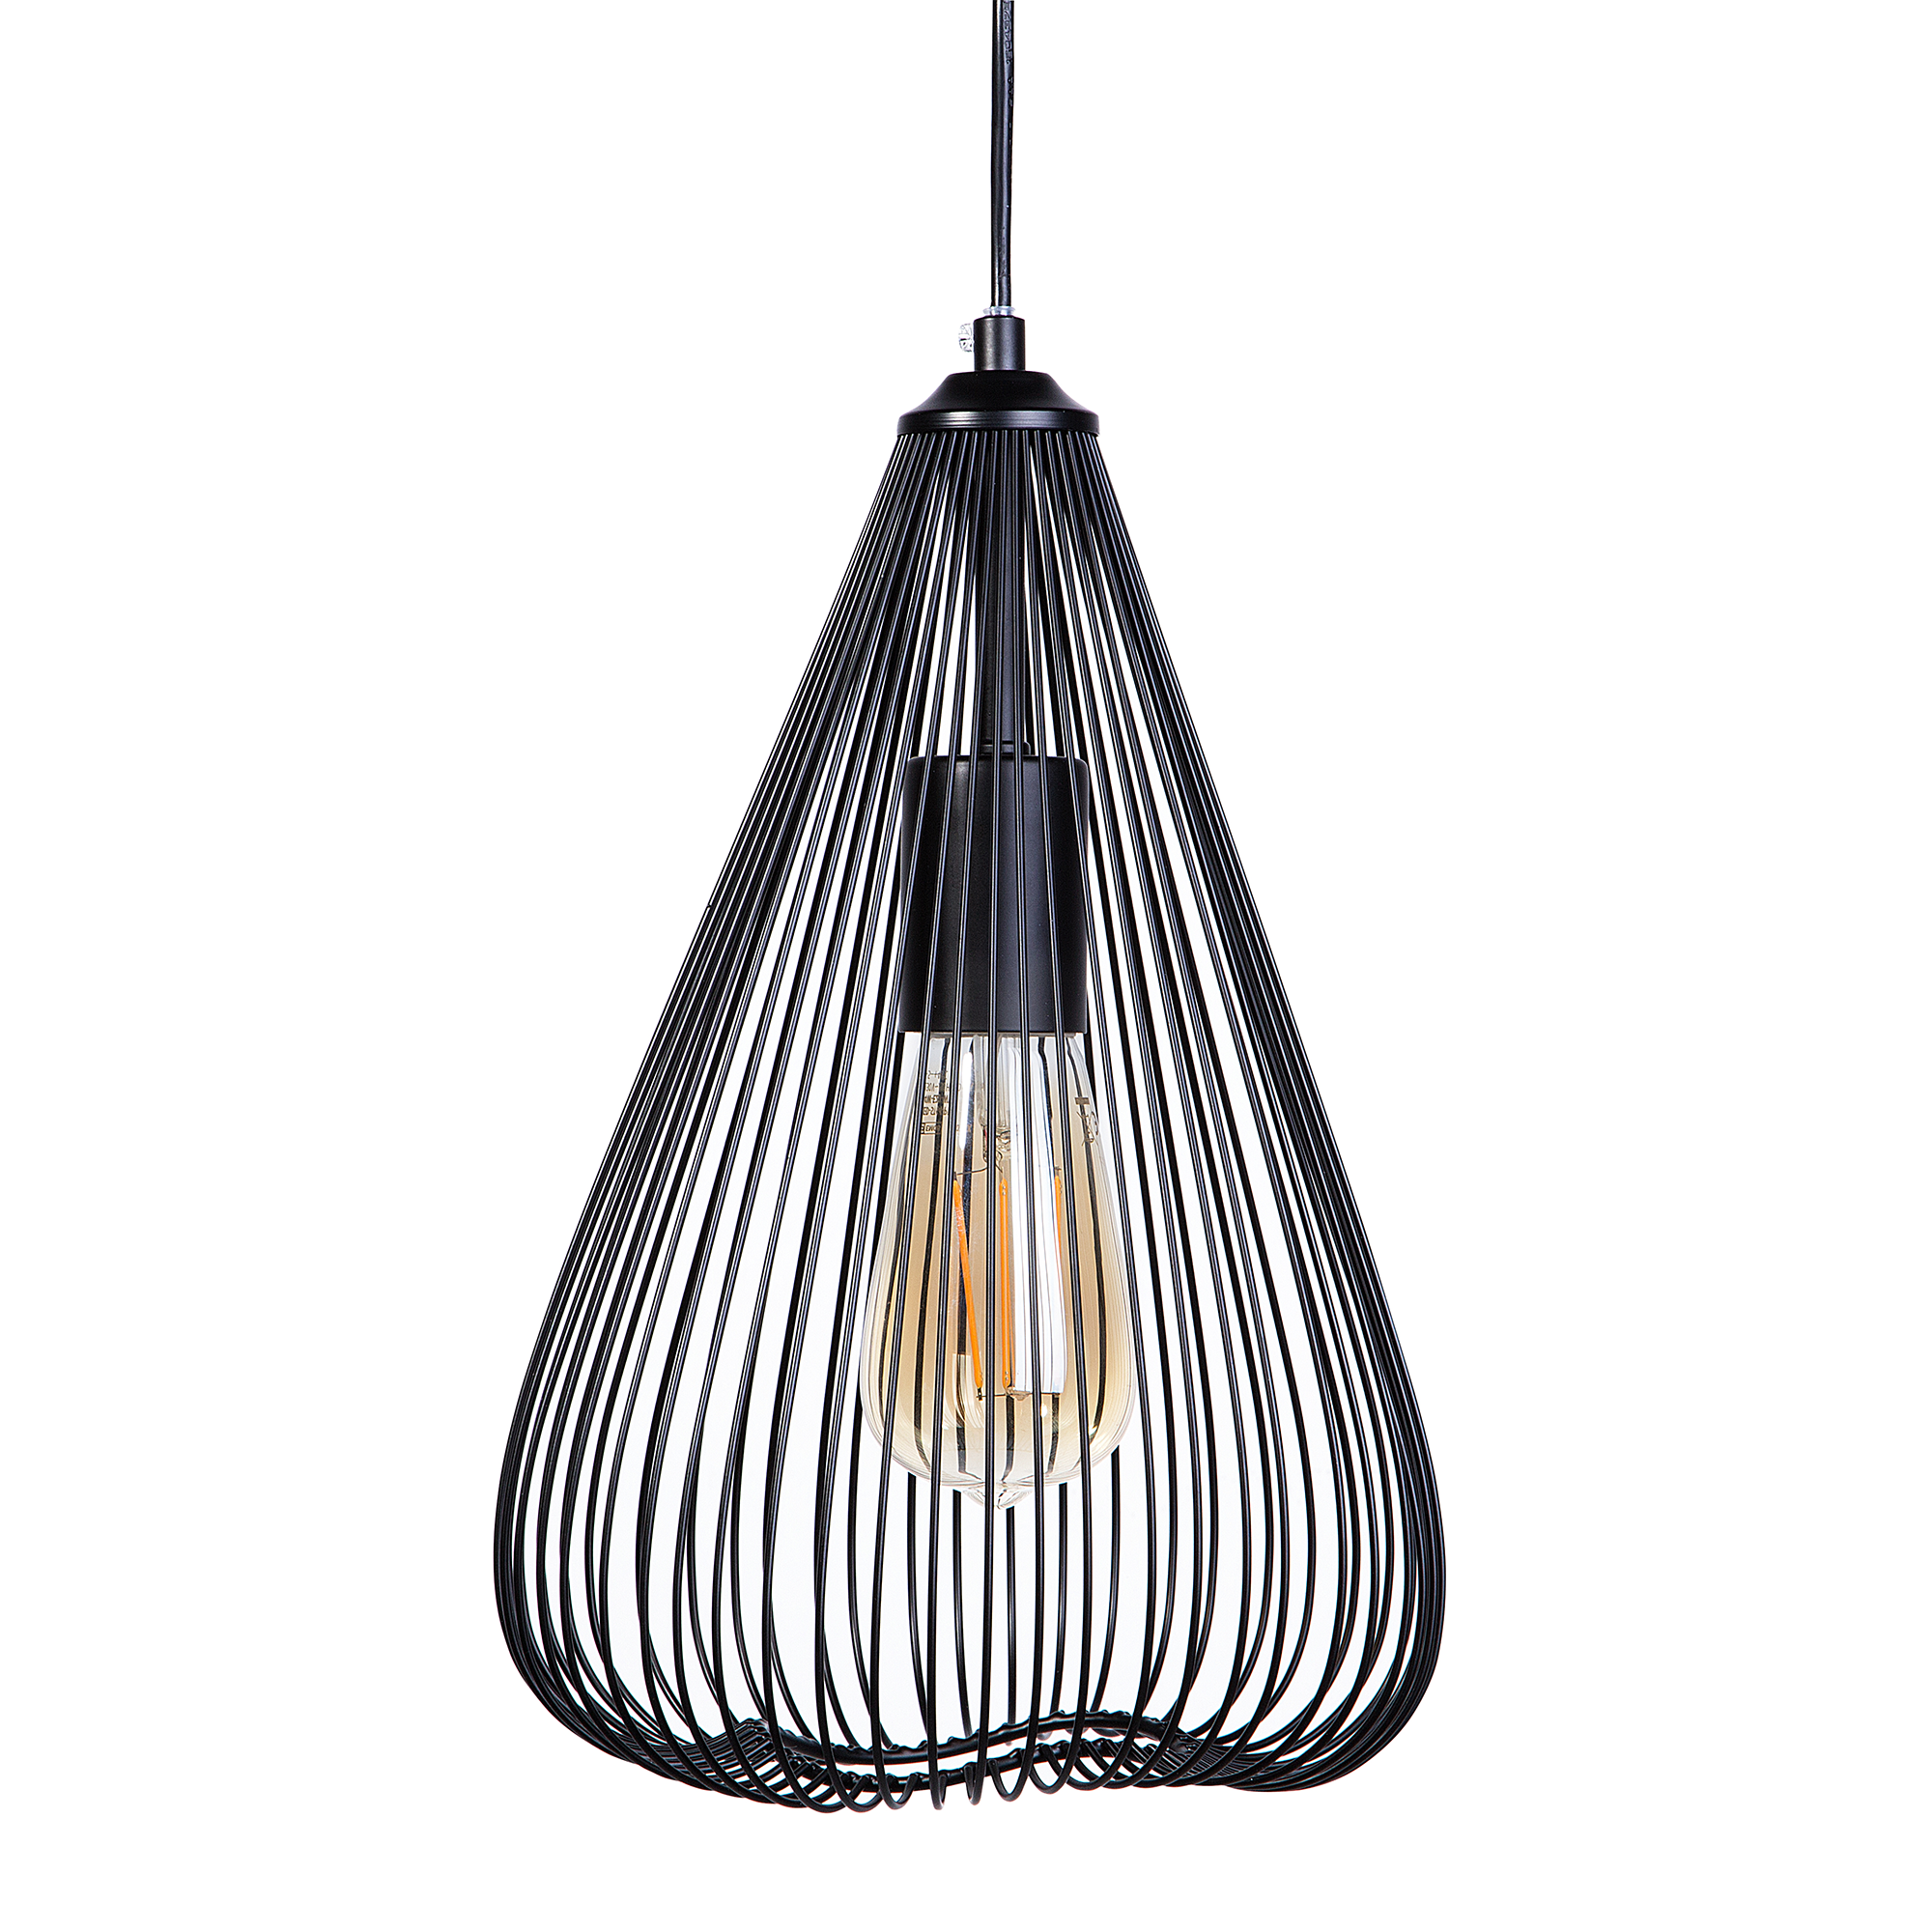 Beliani Hanging Light Pendant Lamp Black Wire Geometric Cage Shade Metal Industrial Design